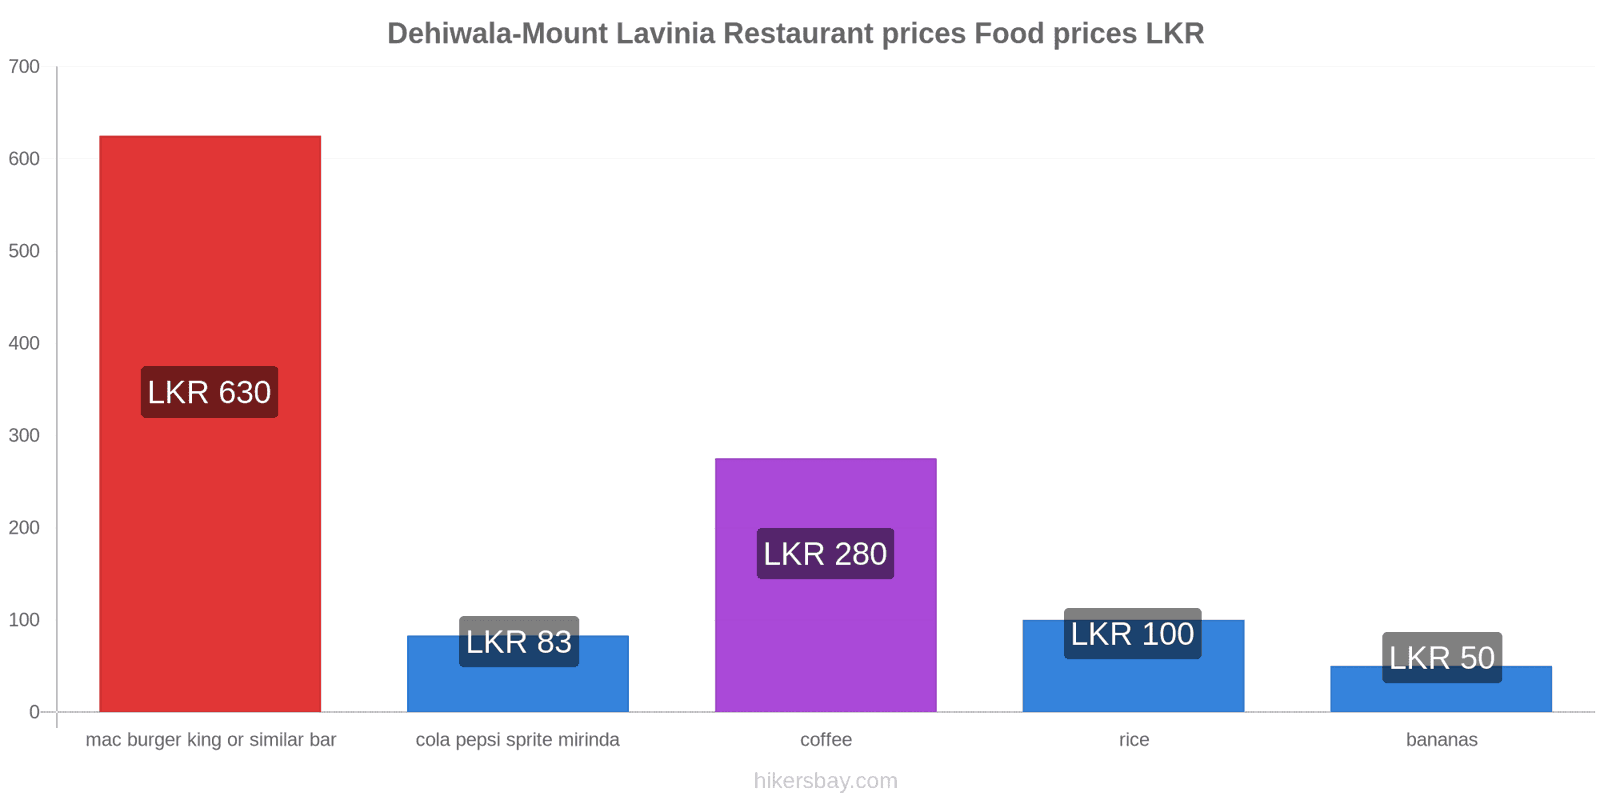 Dehiwala-Mount Lavinia price changes hikersbay.com